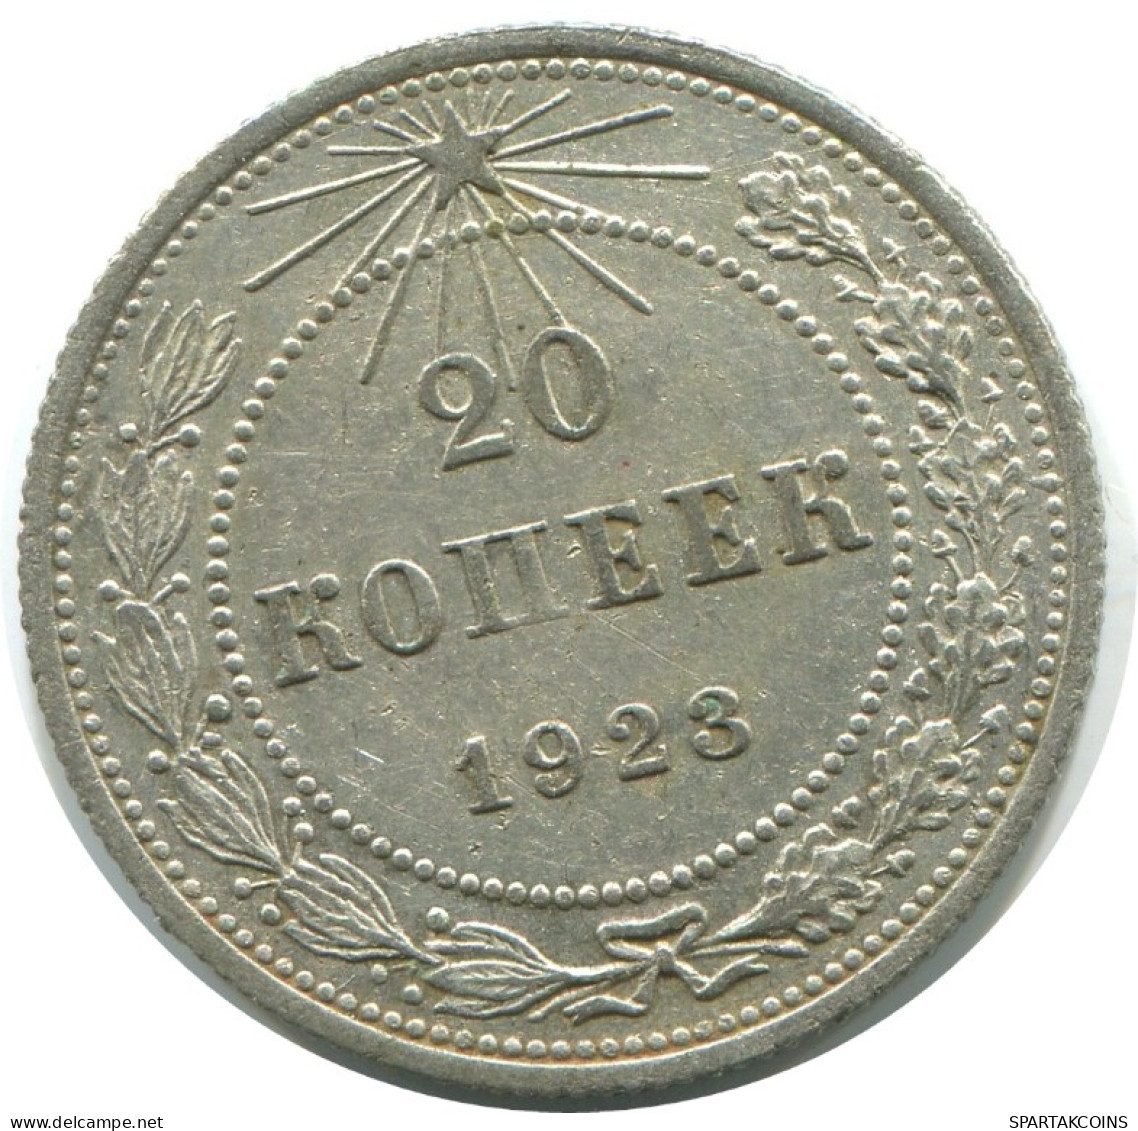 20 KOPEKS 1923 RUSSIA RSFSR SILVER Coin HIGH GRADE #AF433.4.U.A - Russia